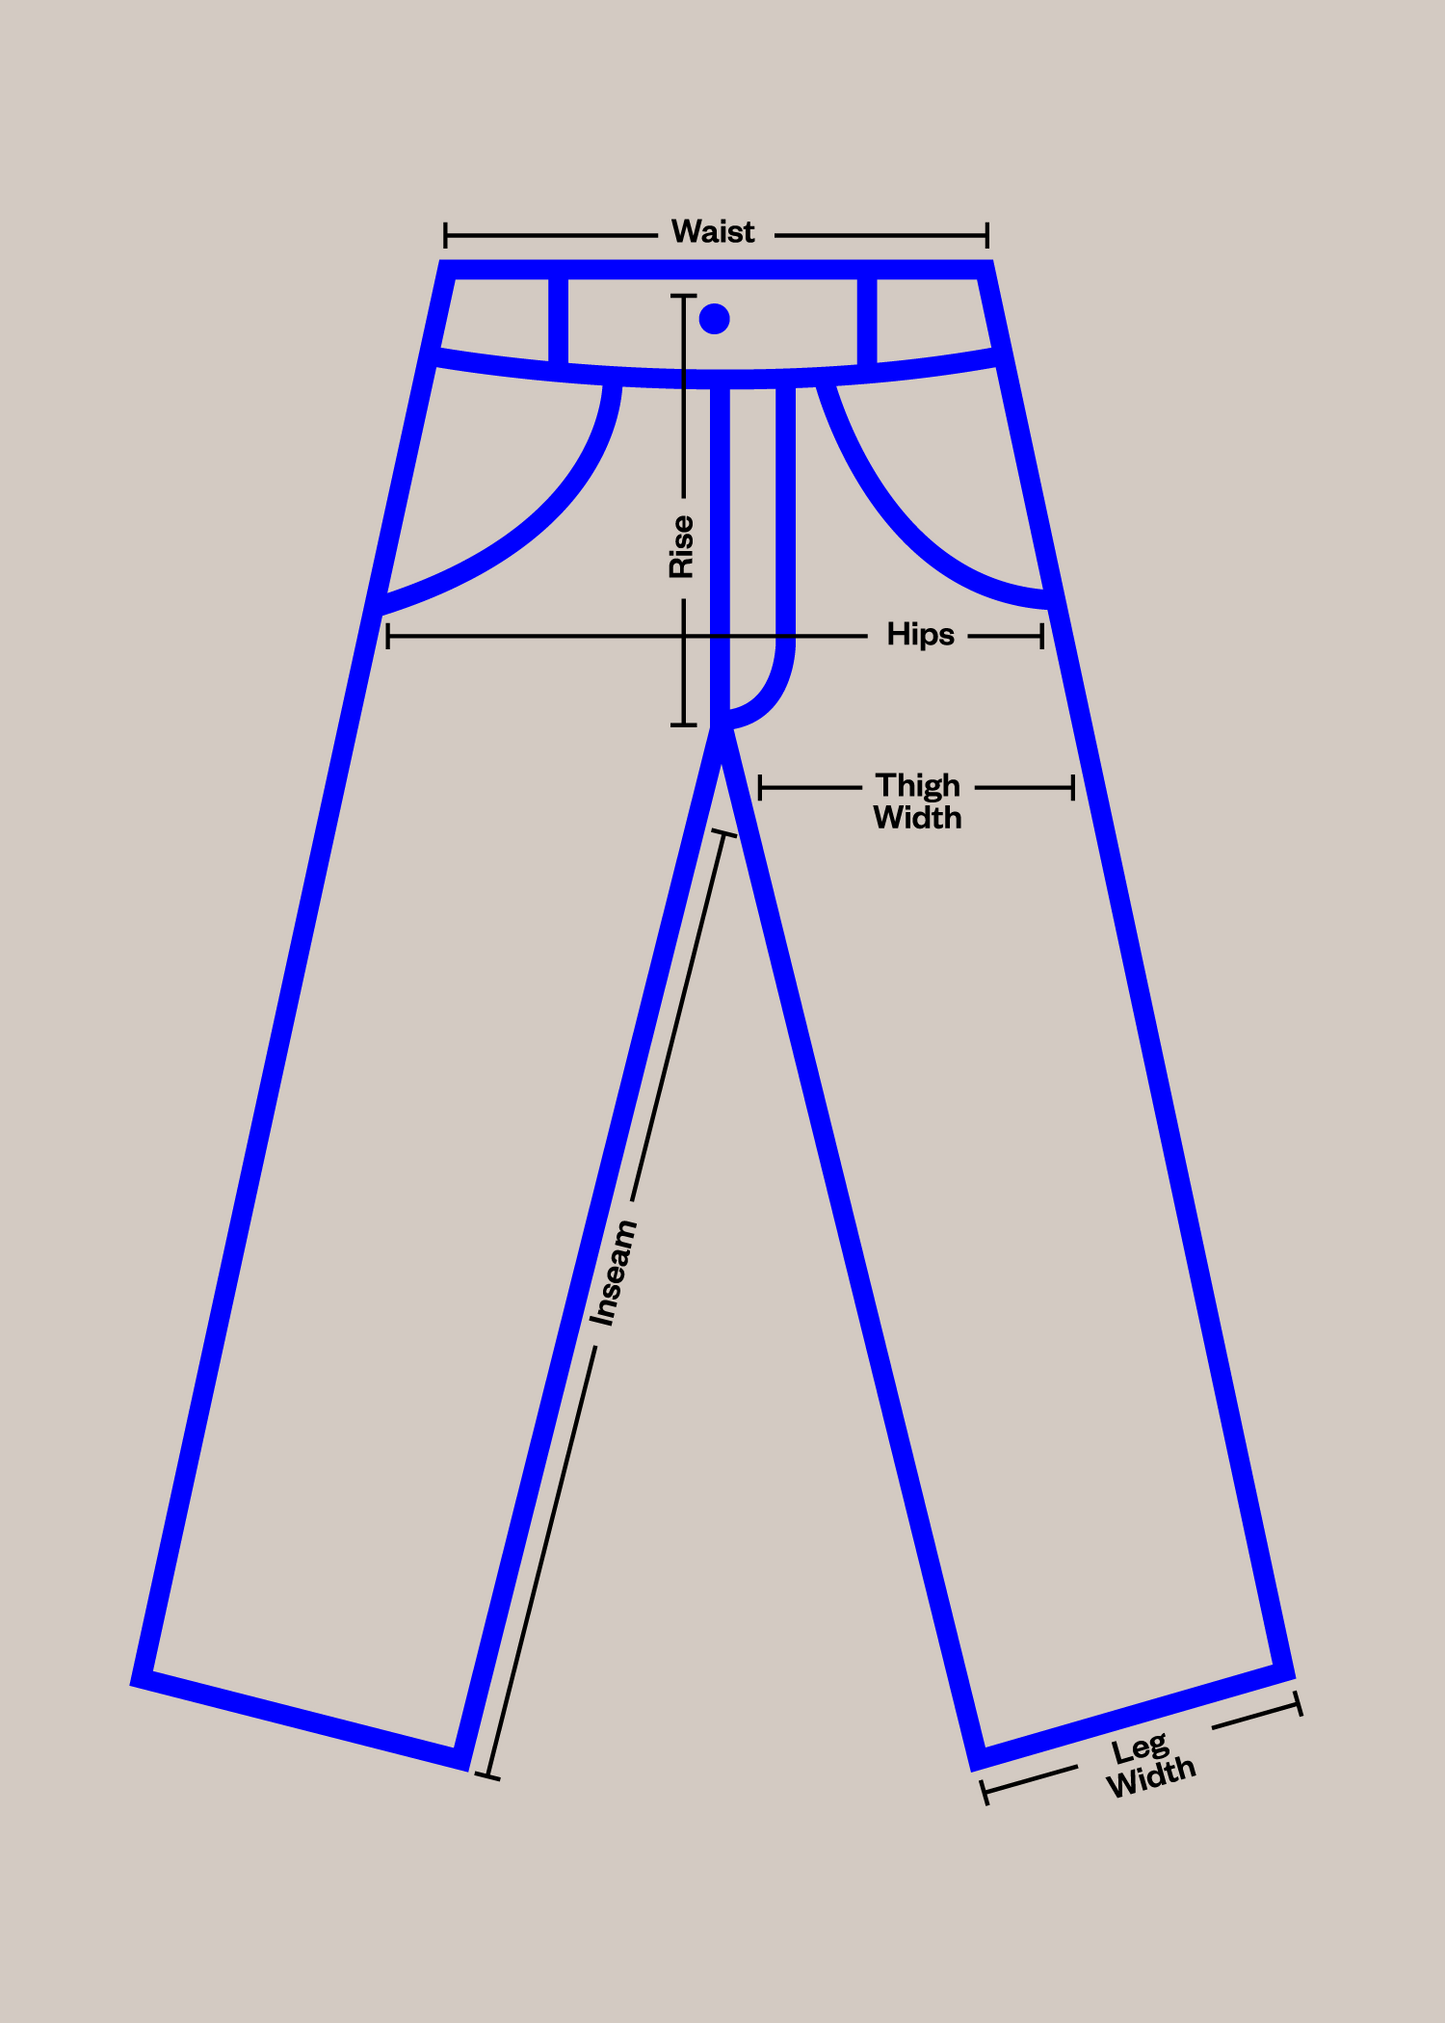 Vintage Lee Corduroy Pants Size Women's 31 Men's 33